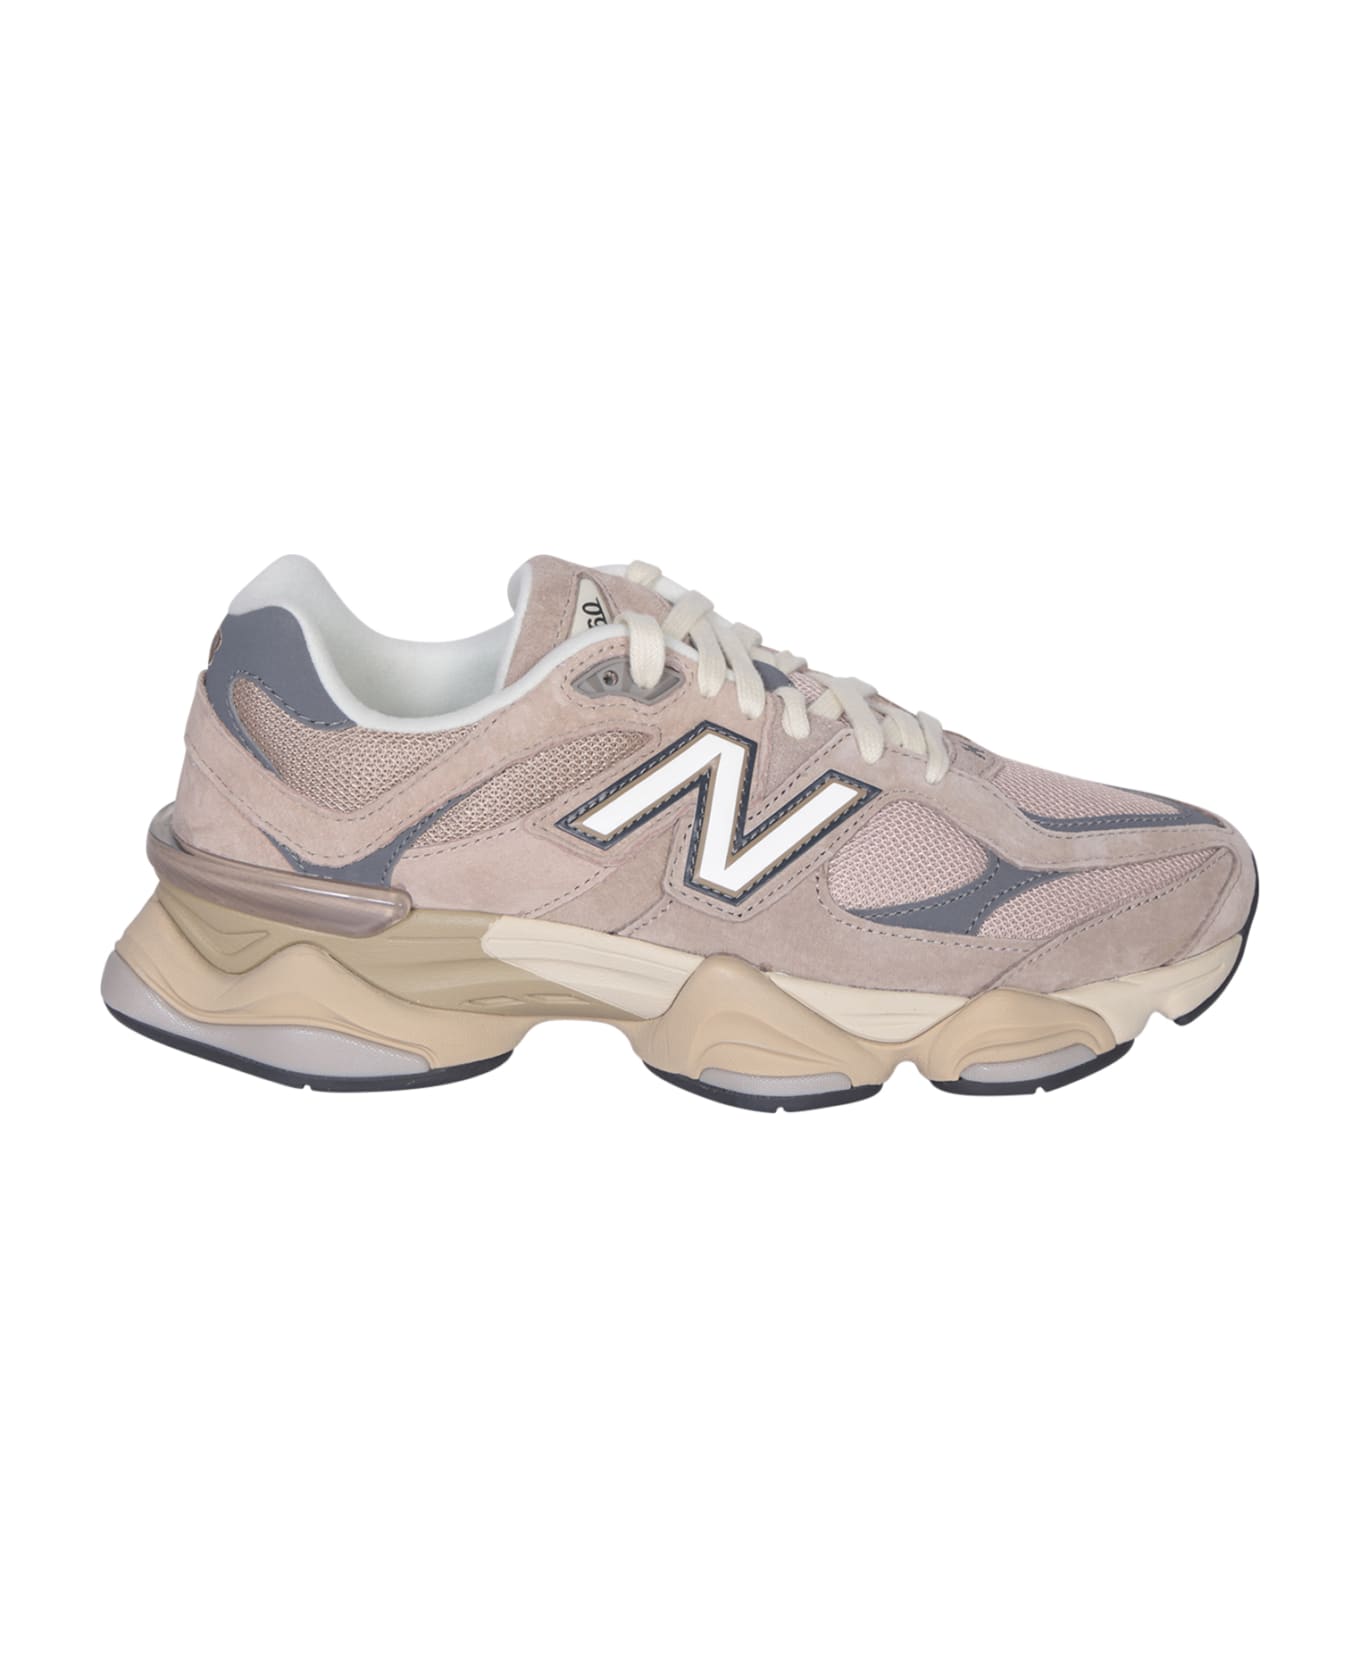 New Balance 9060 Beige/grey Sneakers - White